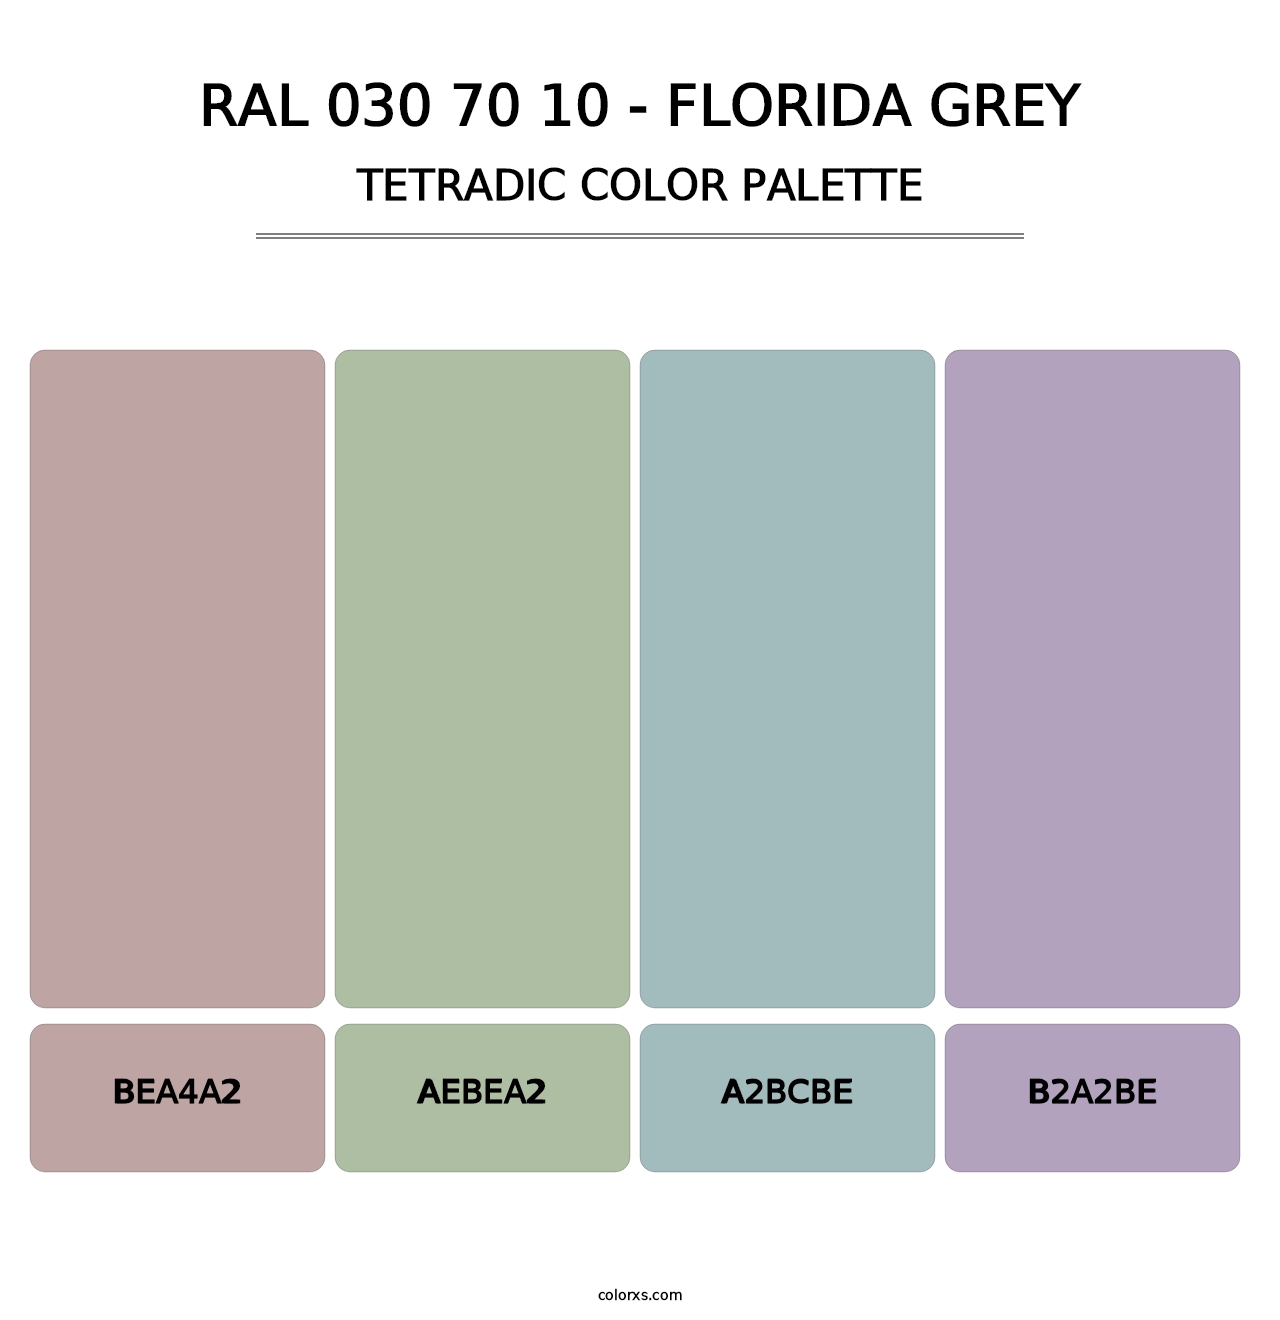 RAL 030 70 10 - Florida Grey - Tetradic Color Palette